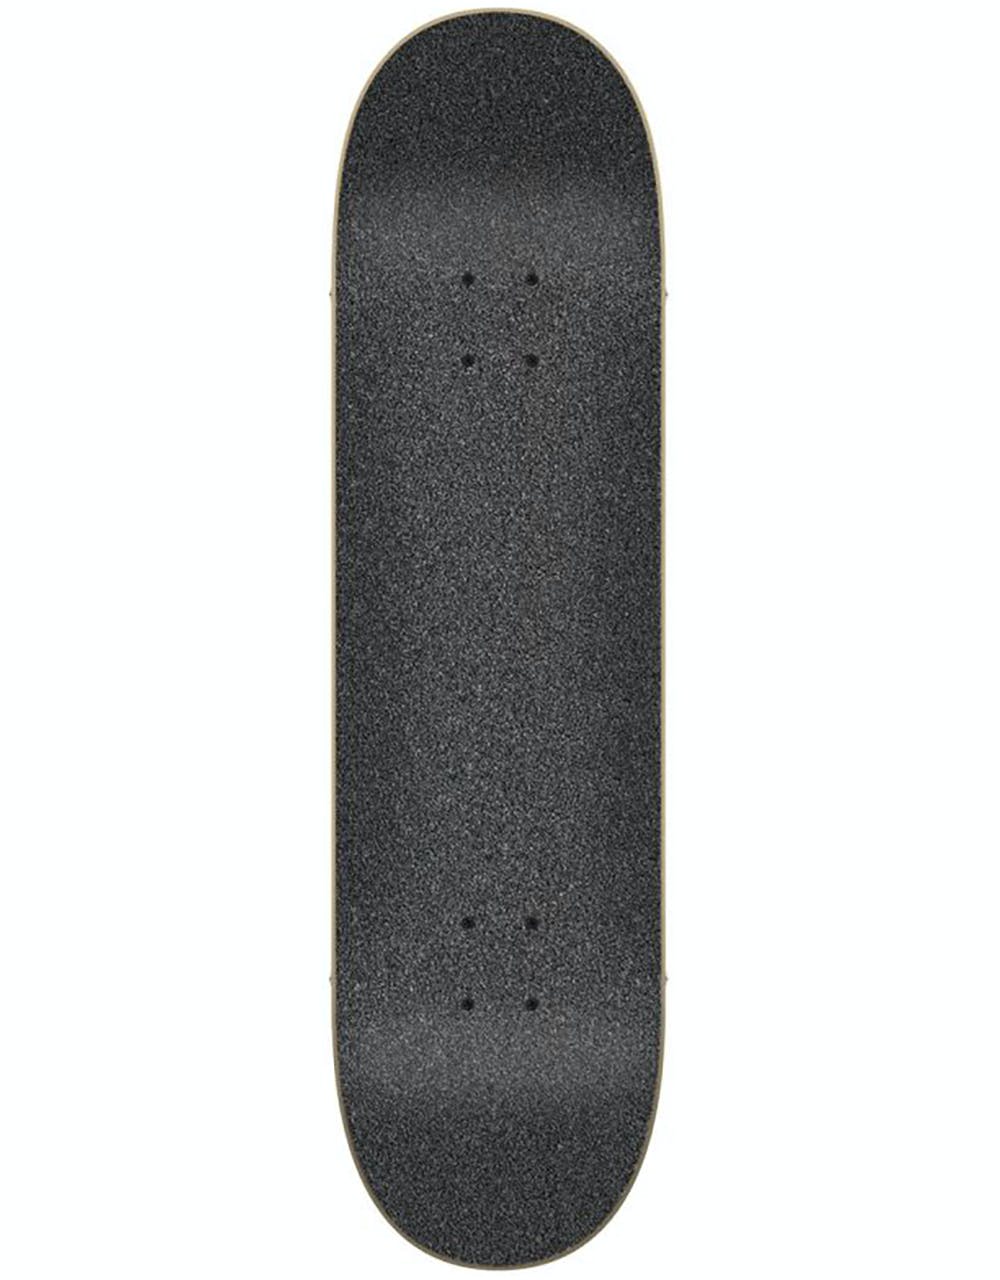 Flip HKD Burst Complete Skateboard - 7.88"